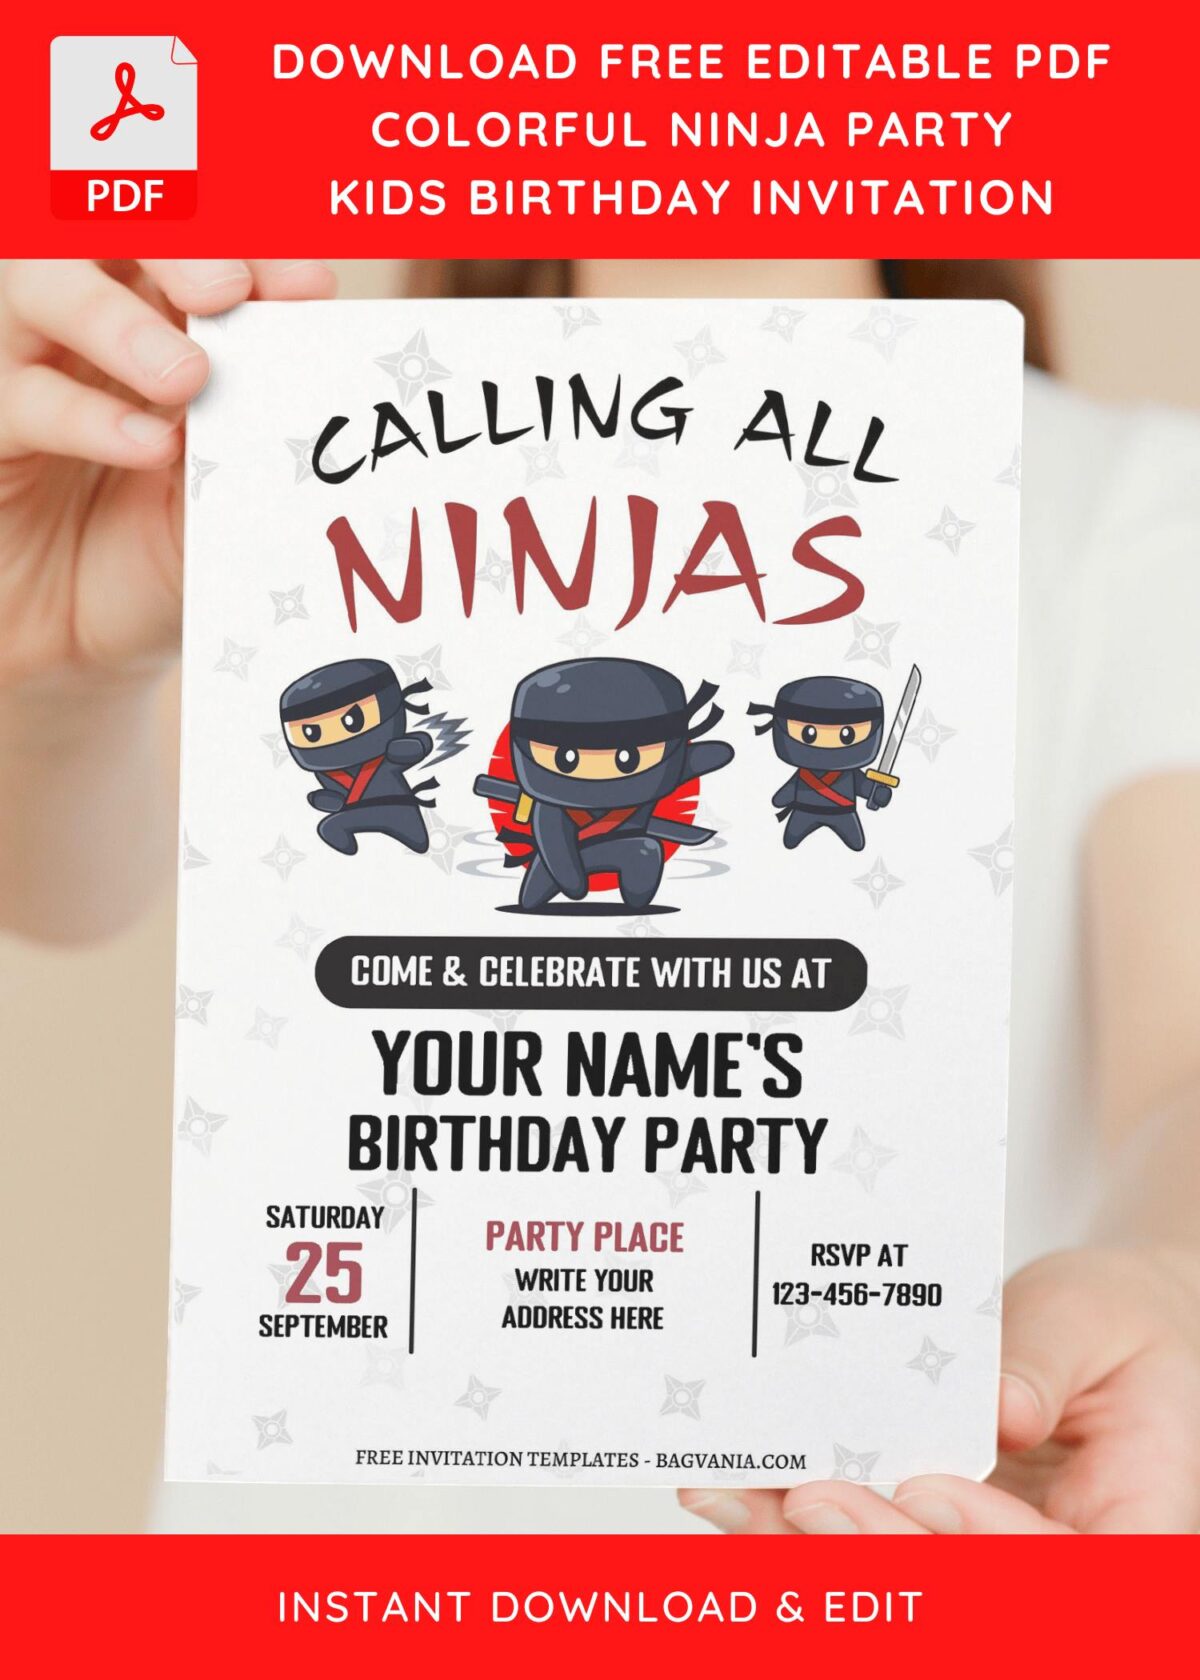 (Free Editable PDF) Super Fun Ninja Kids Birthday Invitation Templates with colorful text